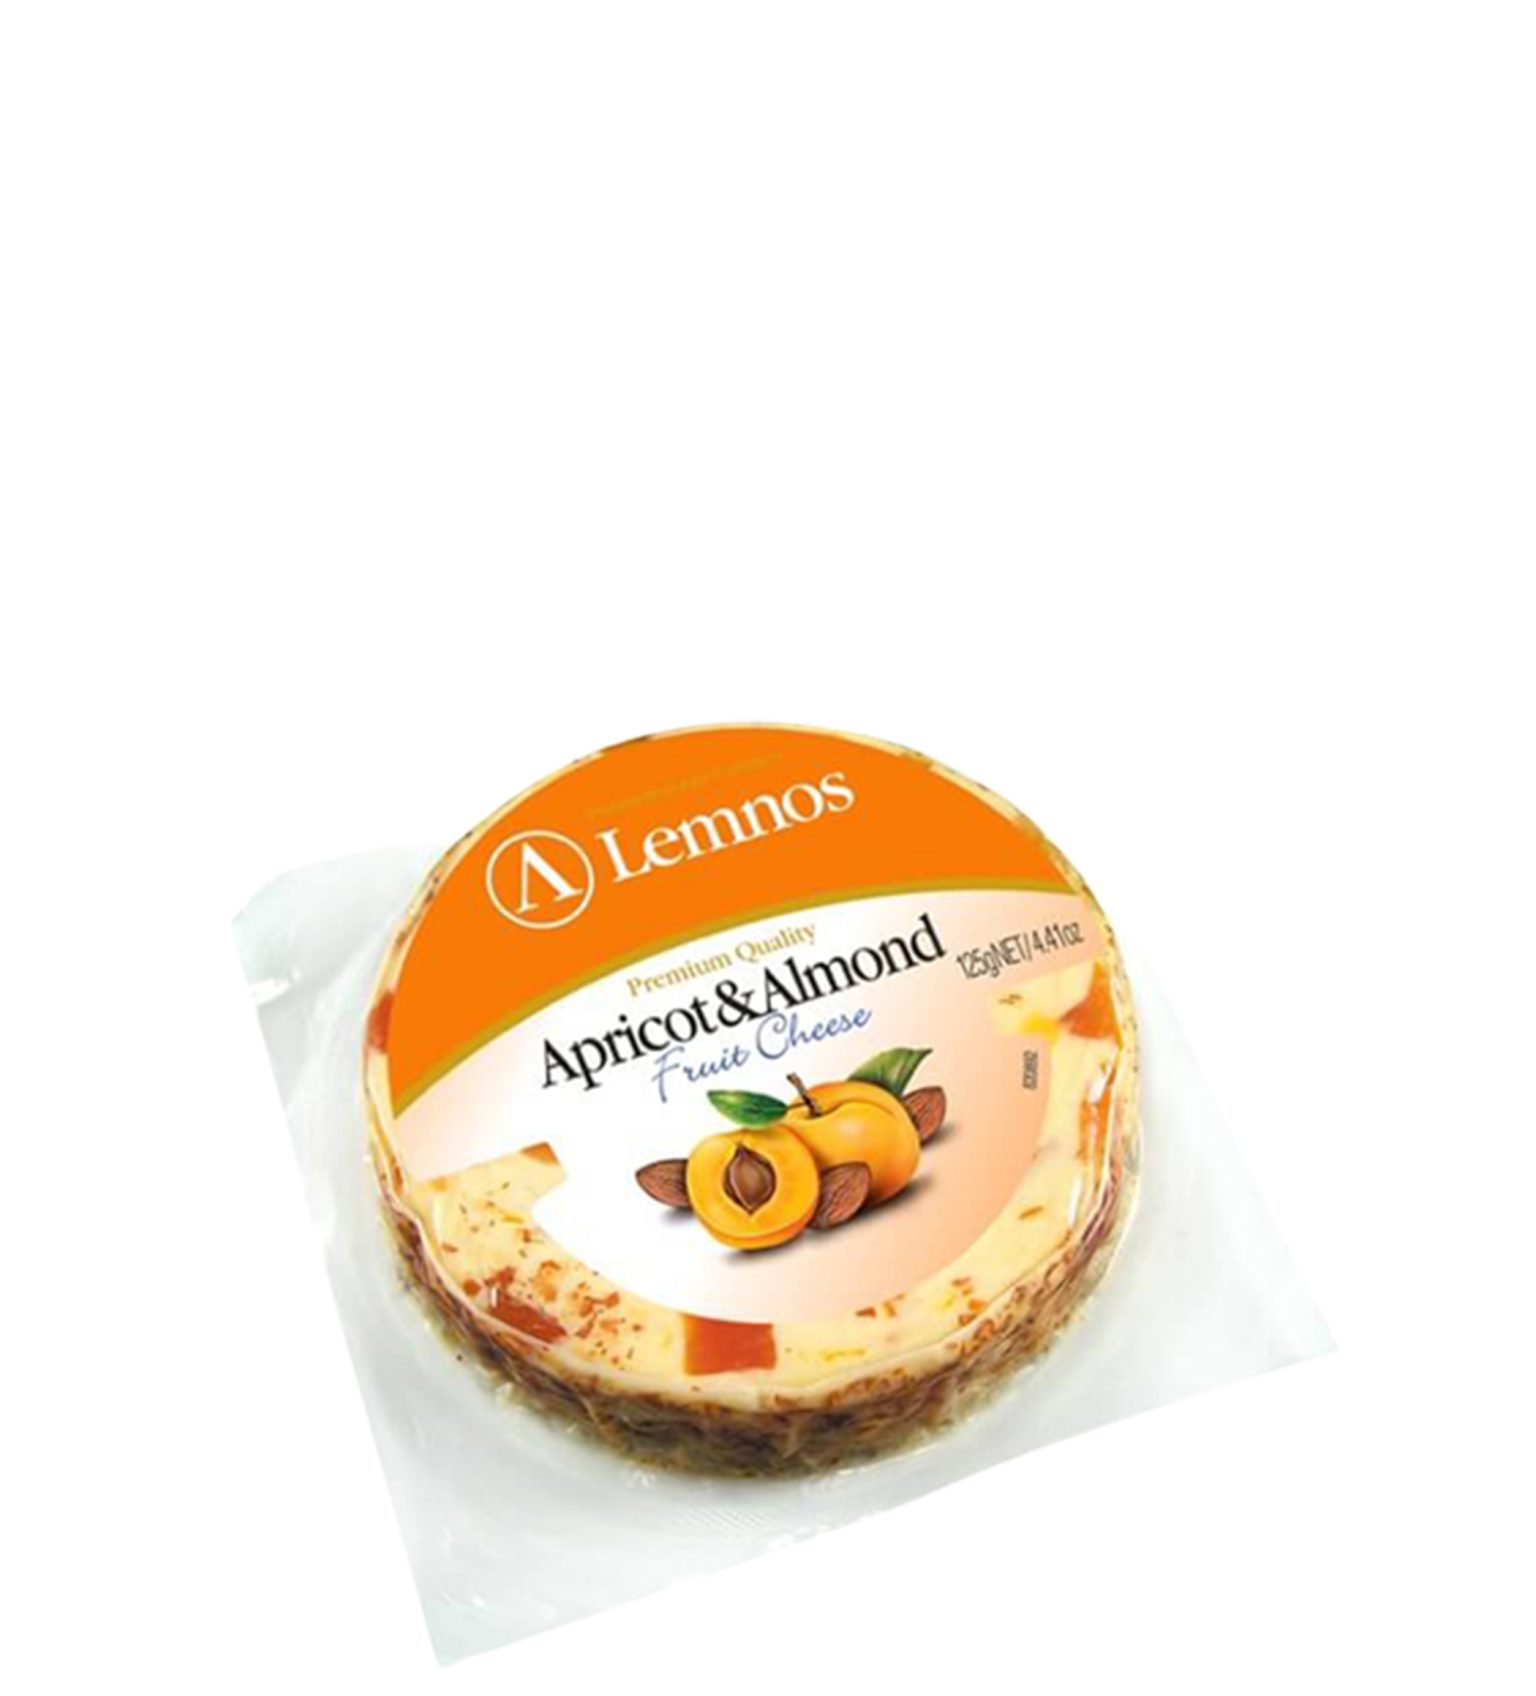 Lemnos Apricot & Almond 125g main image